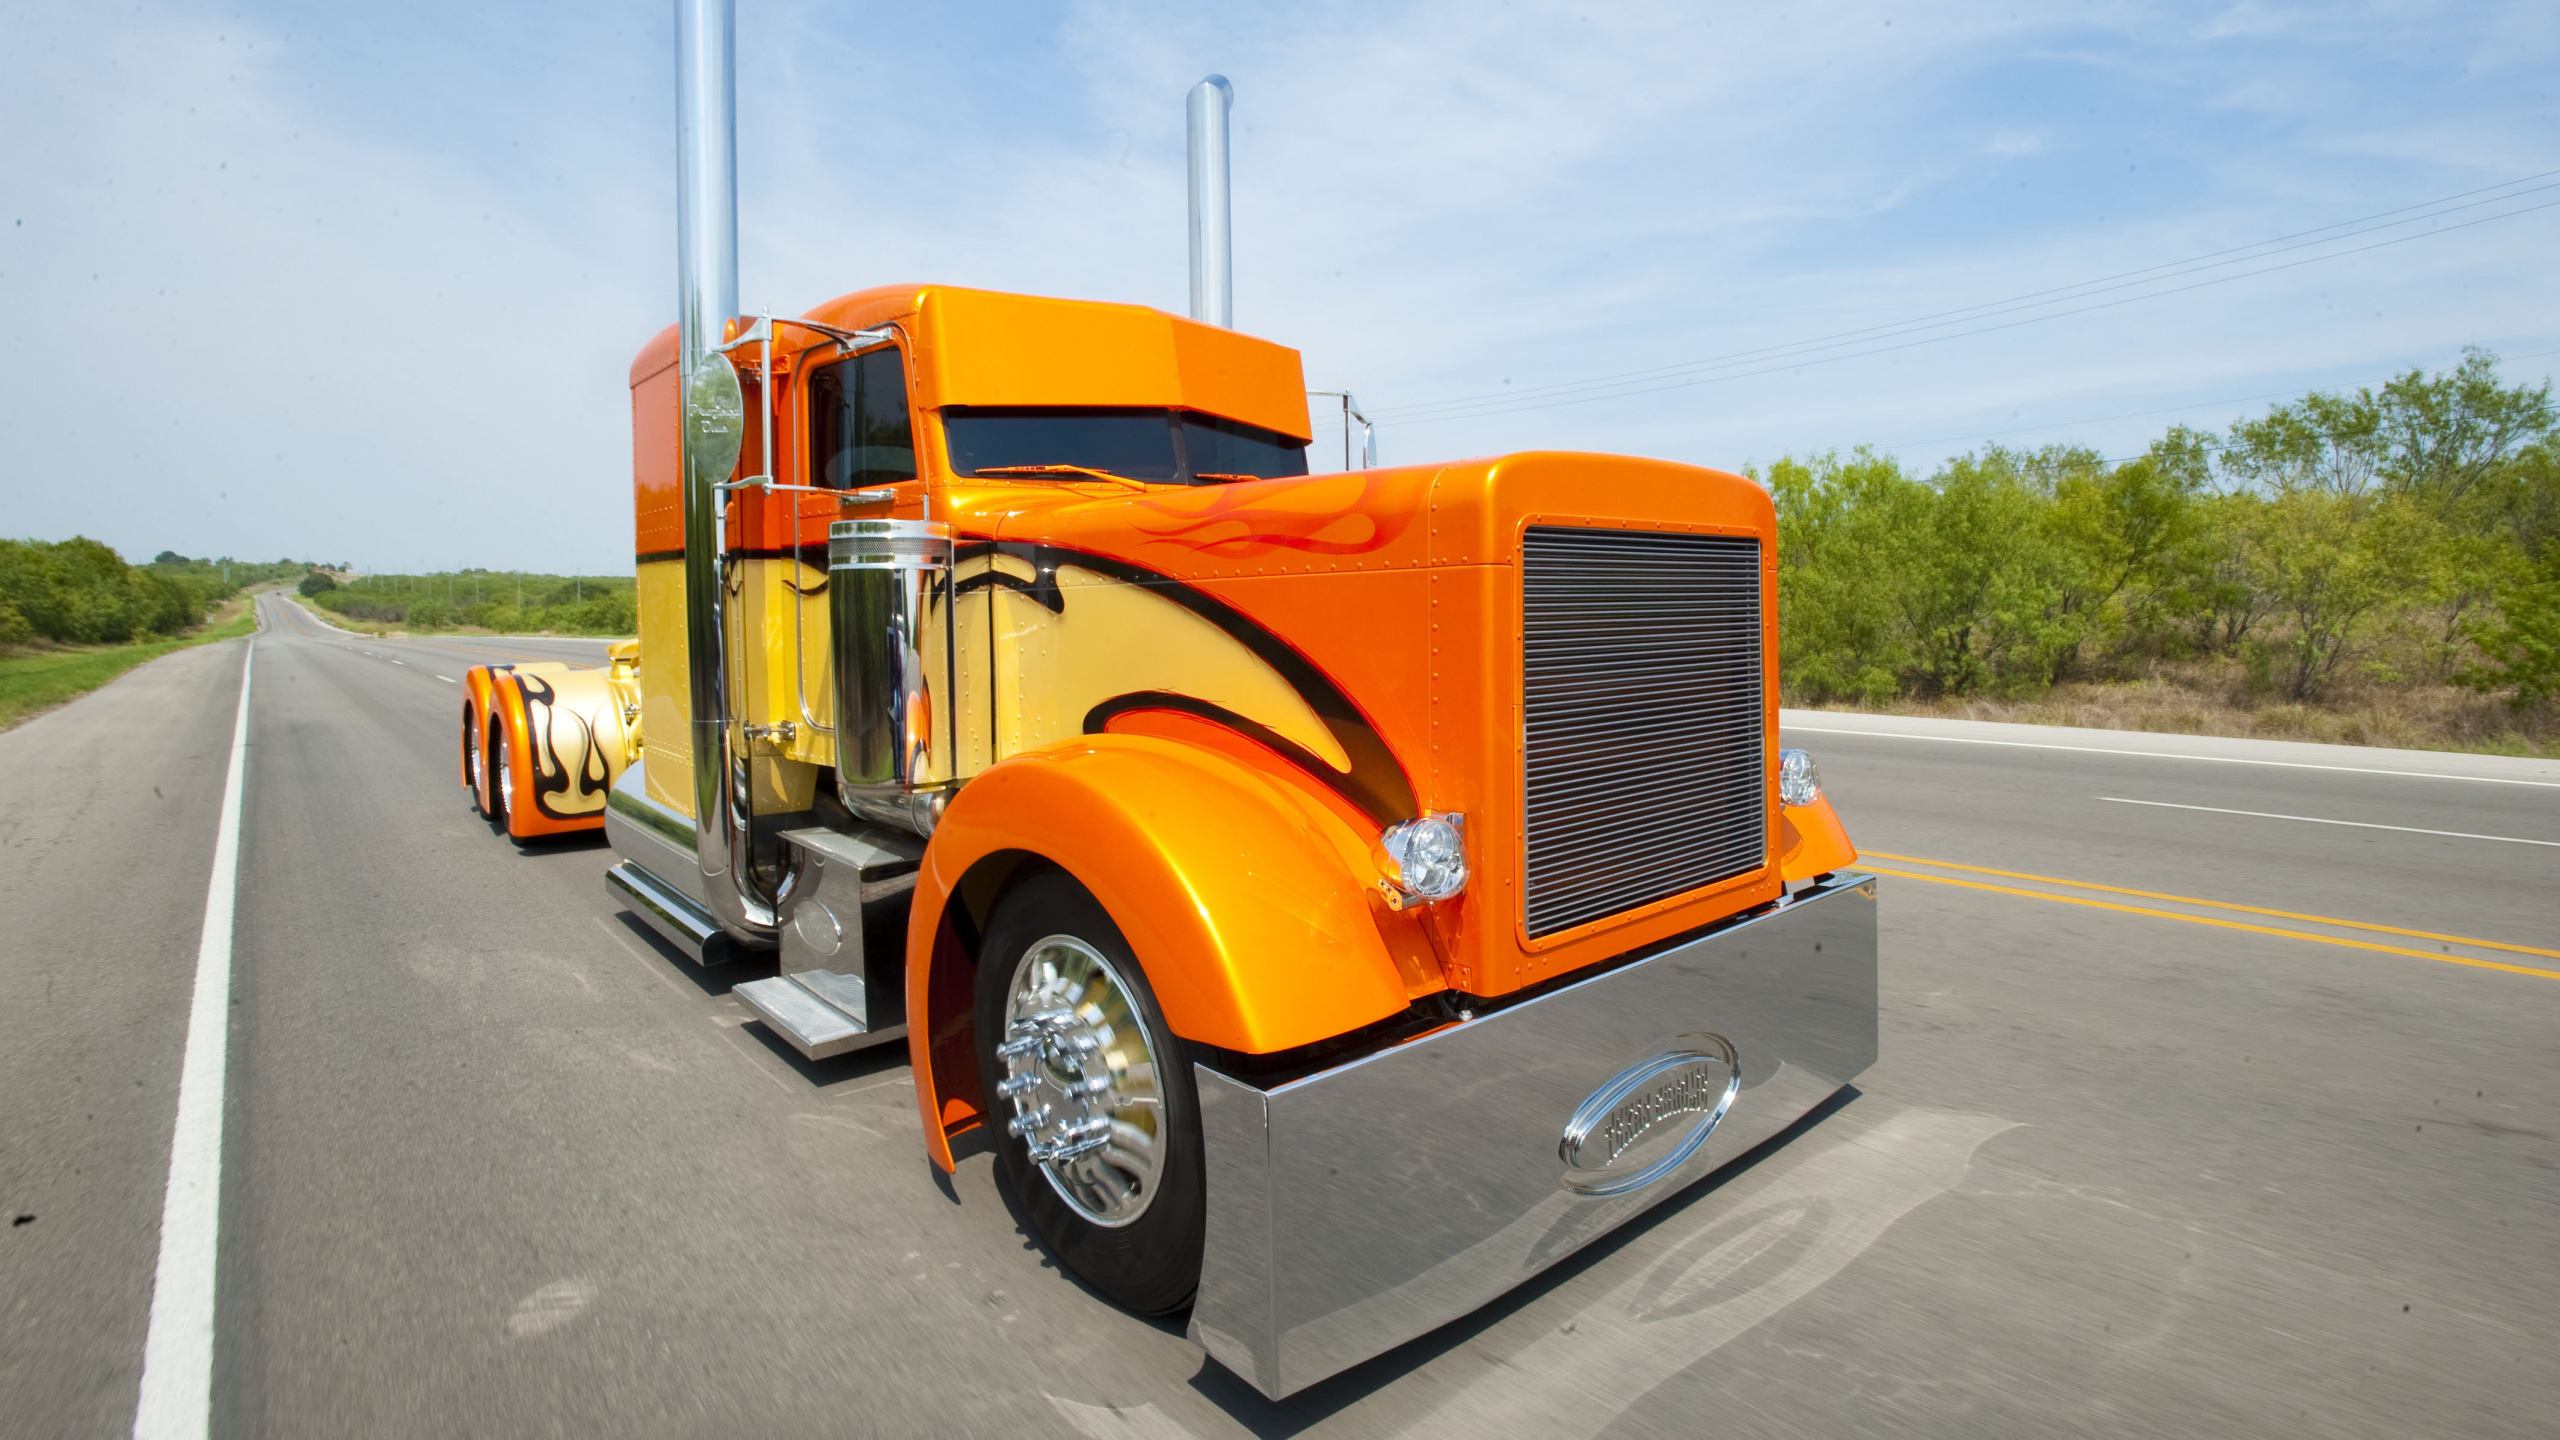 Orange Truck on Road During Daytime. Wallpaper in 2560x1440 Resolution